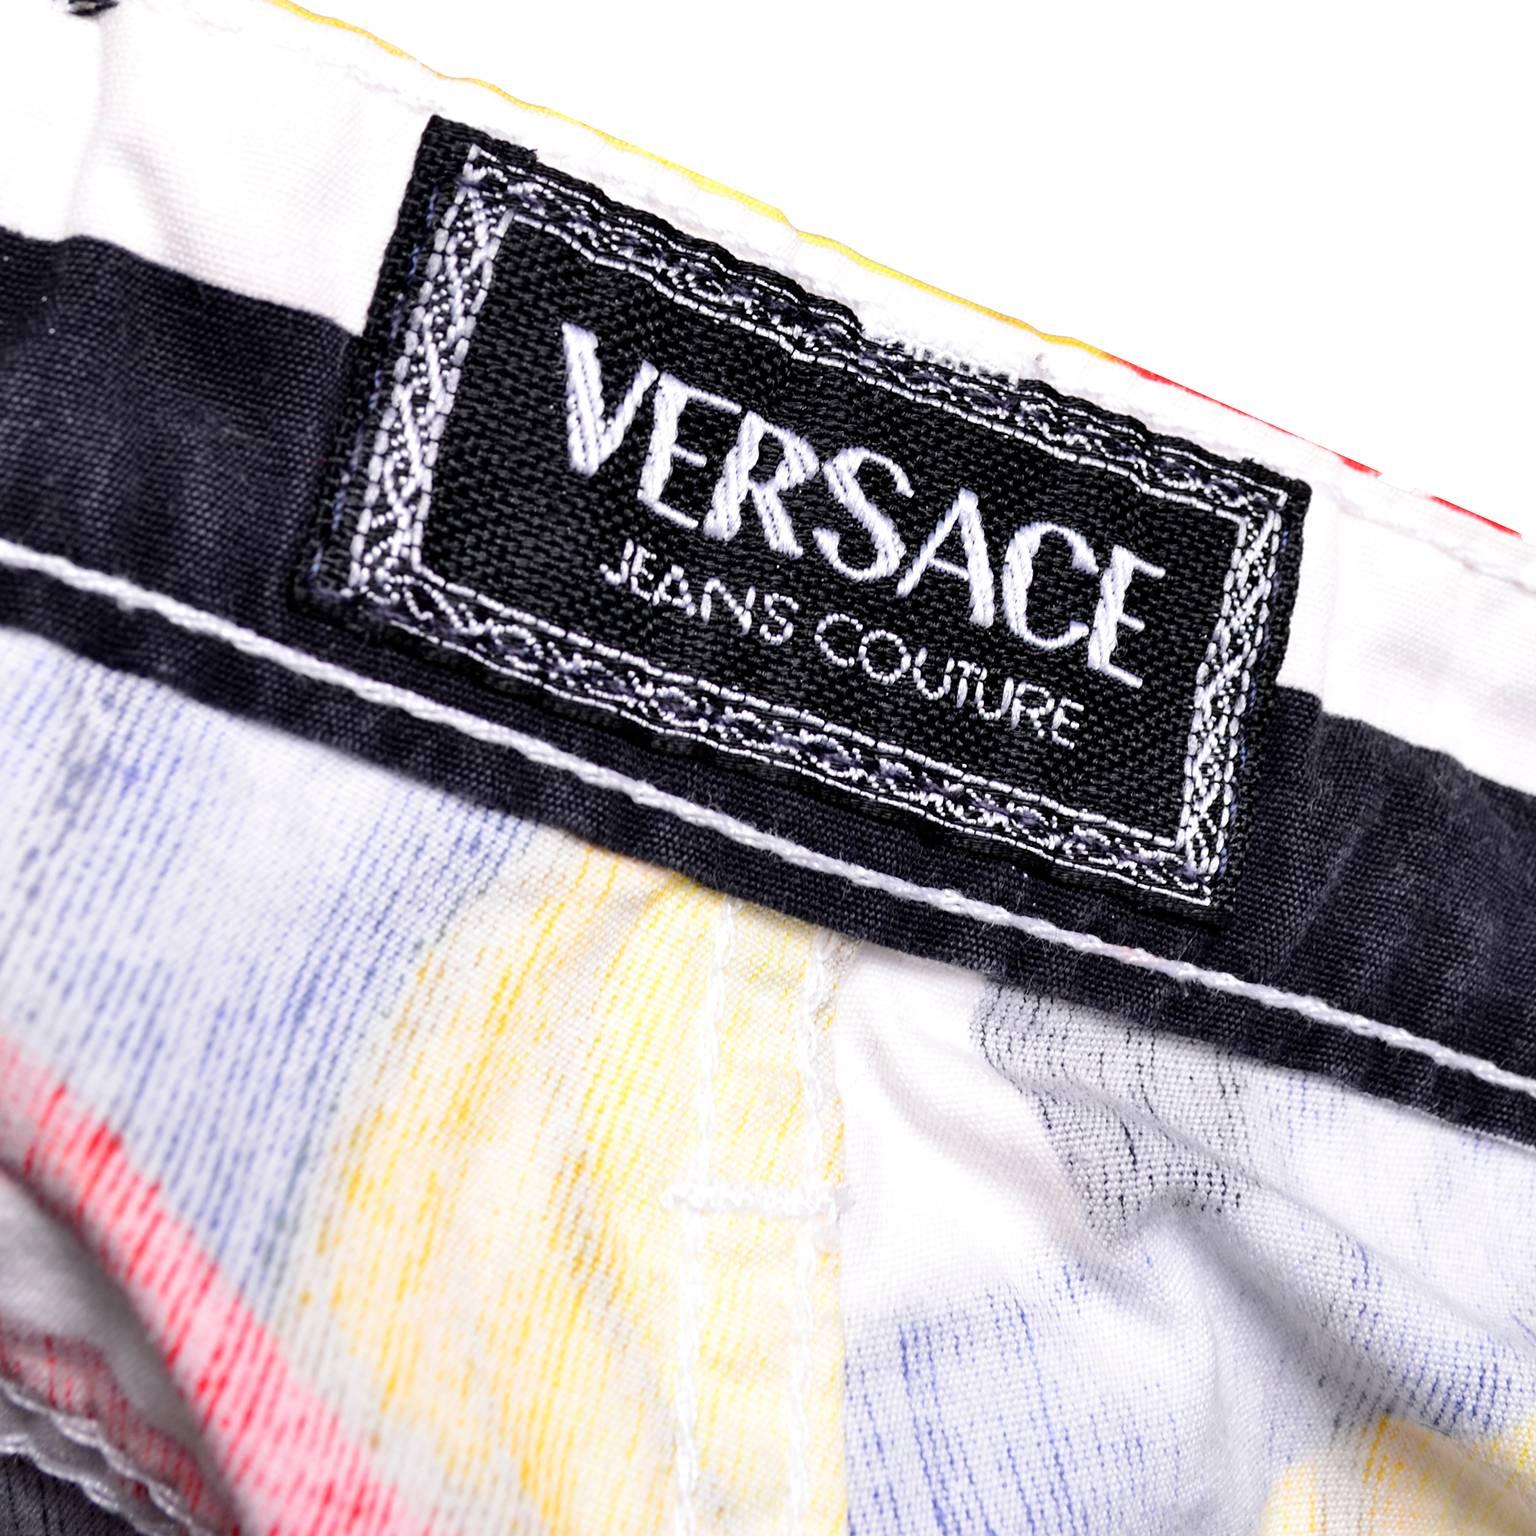 Rare Vintage Gianni Versace Jeans Couture Pants W Novelty Flag Print Size 26 XS 1